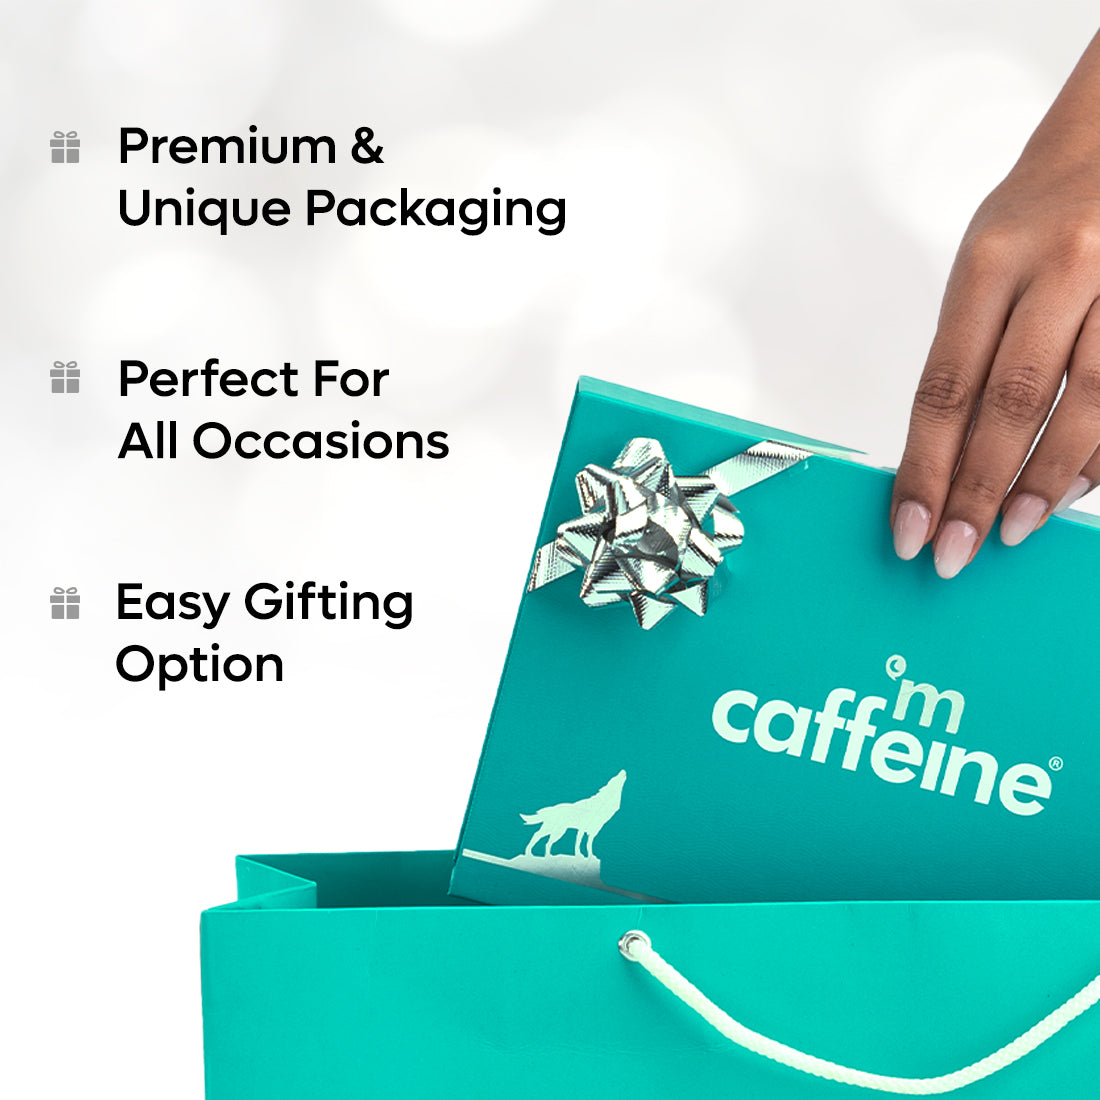 mCaffeine Coffee Care & Pamper Gift Kit